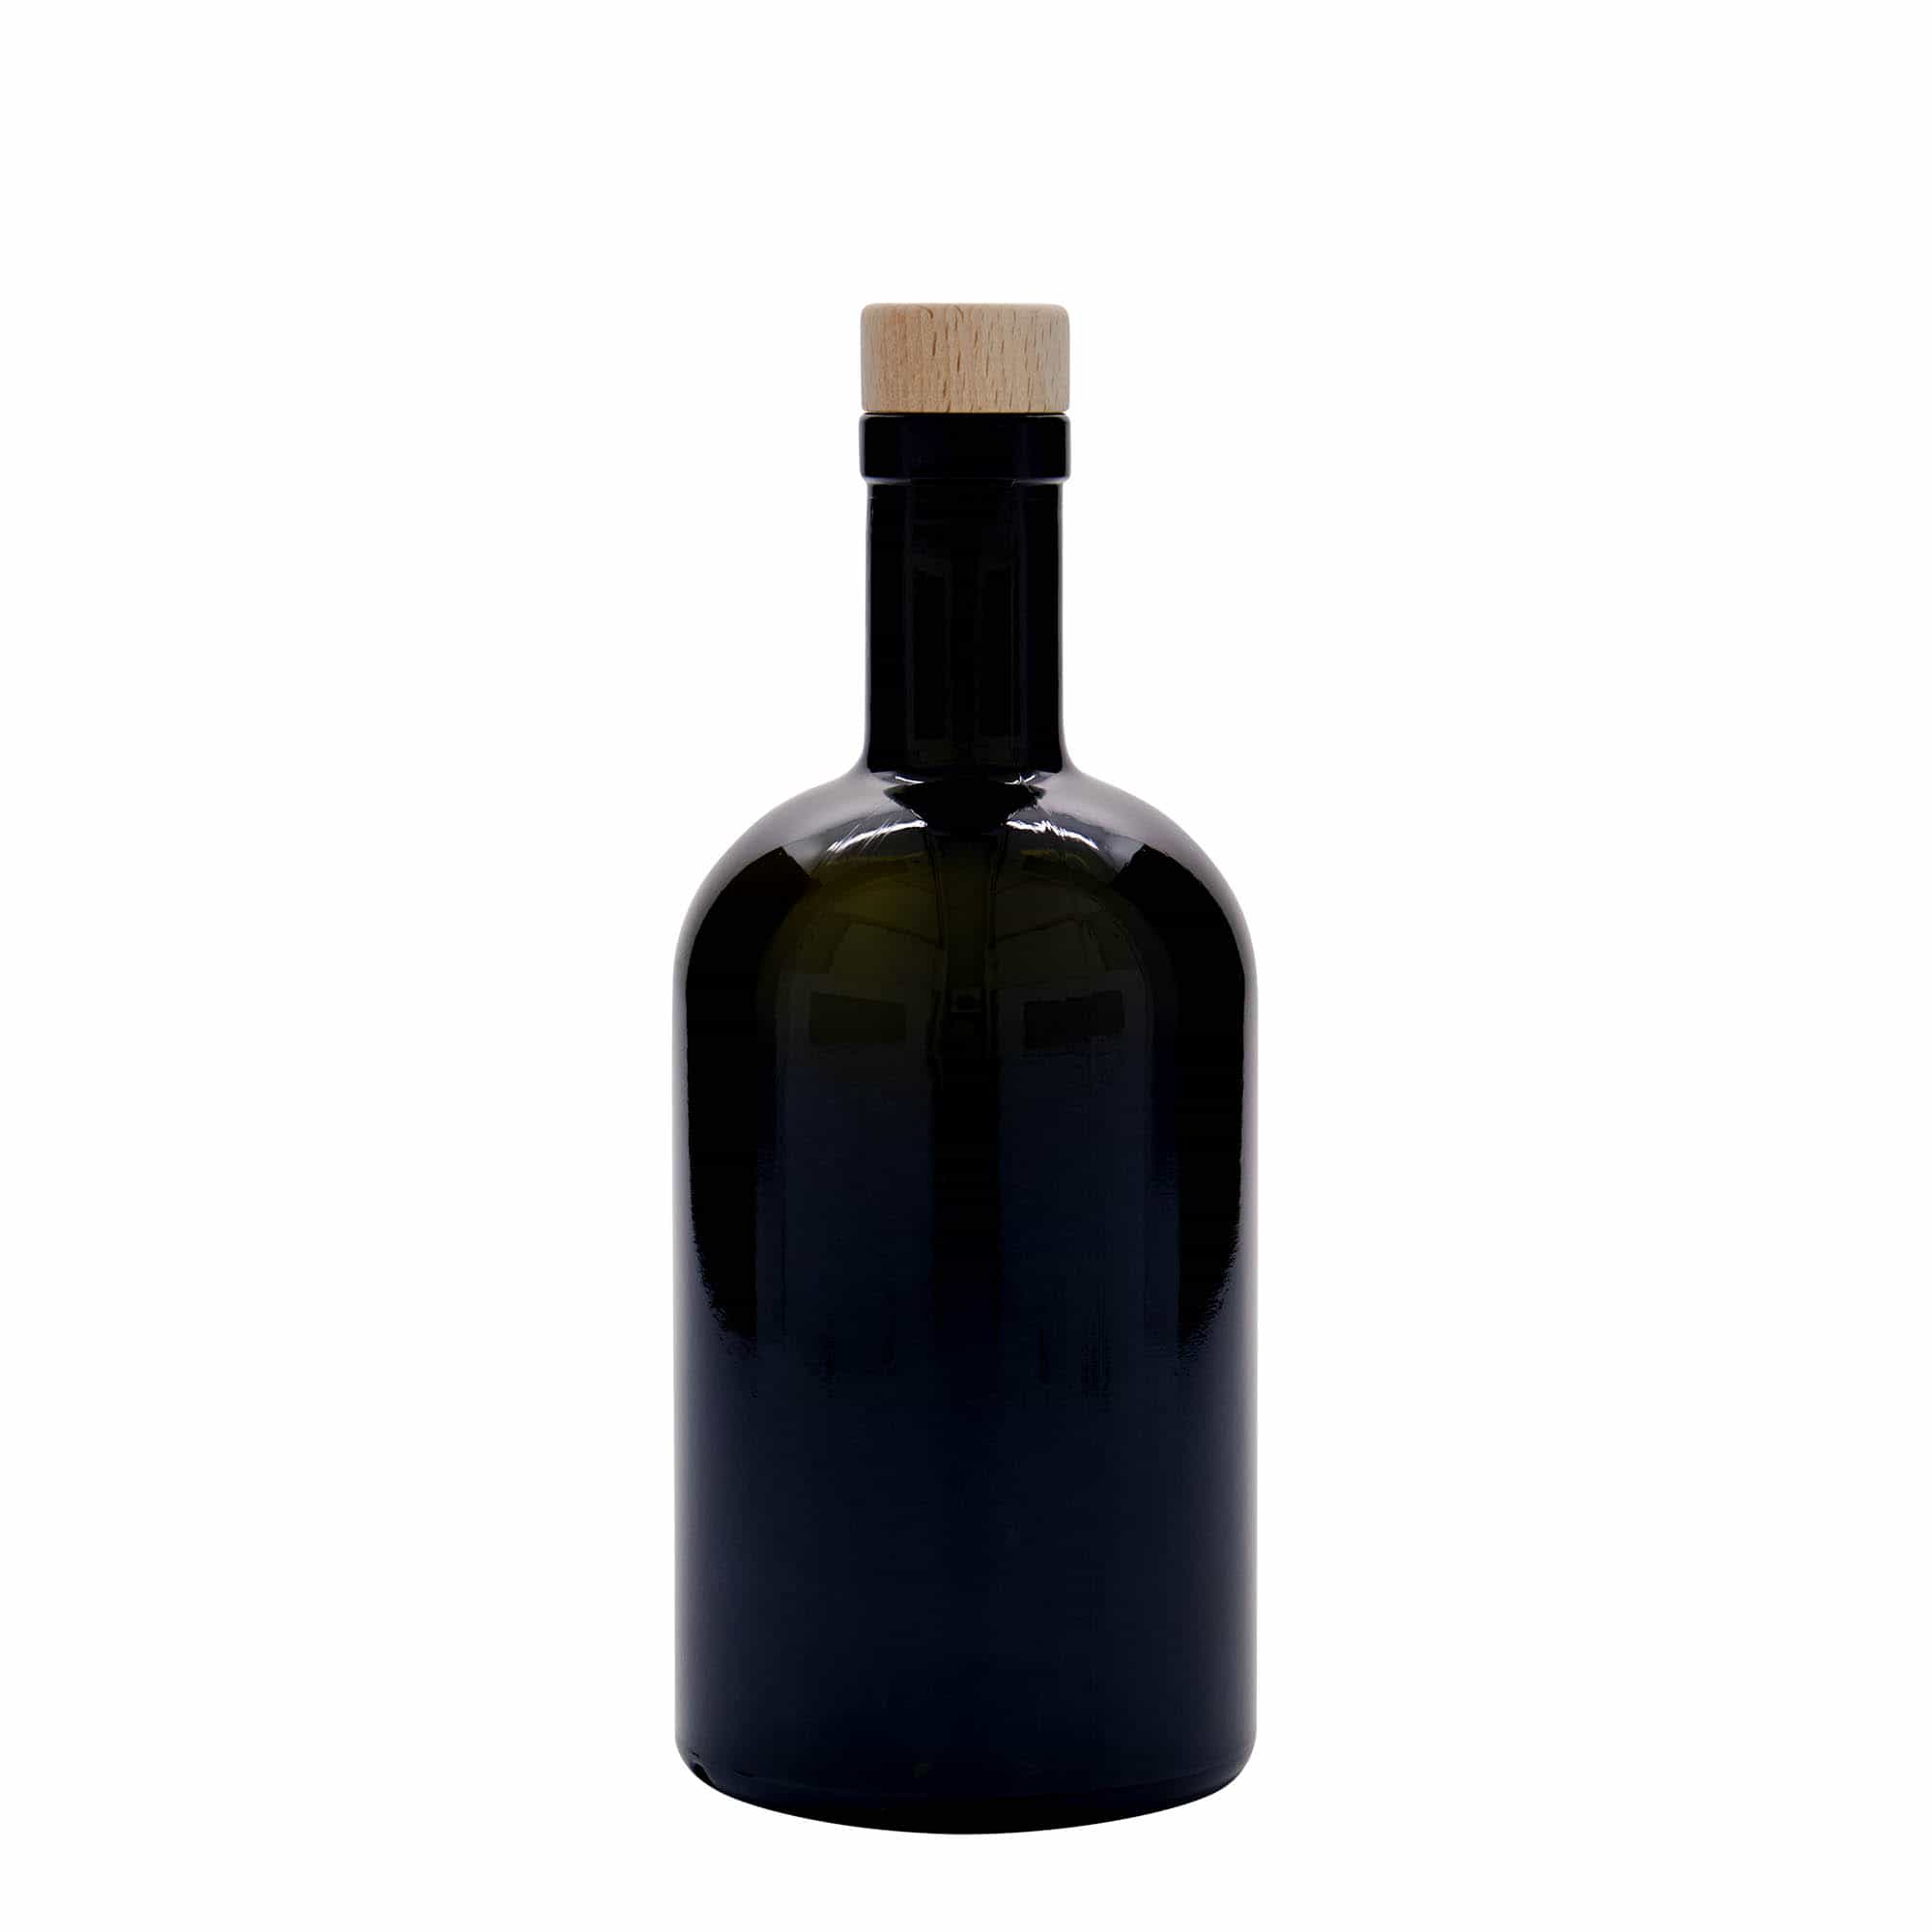 500 ml glass bottle 'Farmacia', antique green, closure: cork